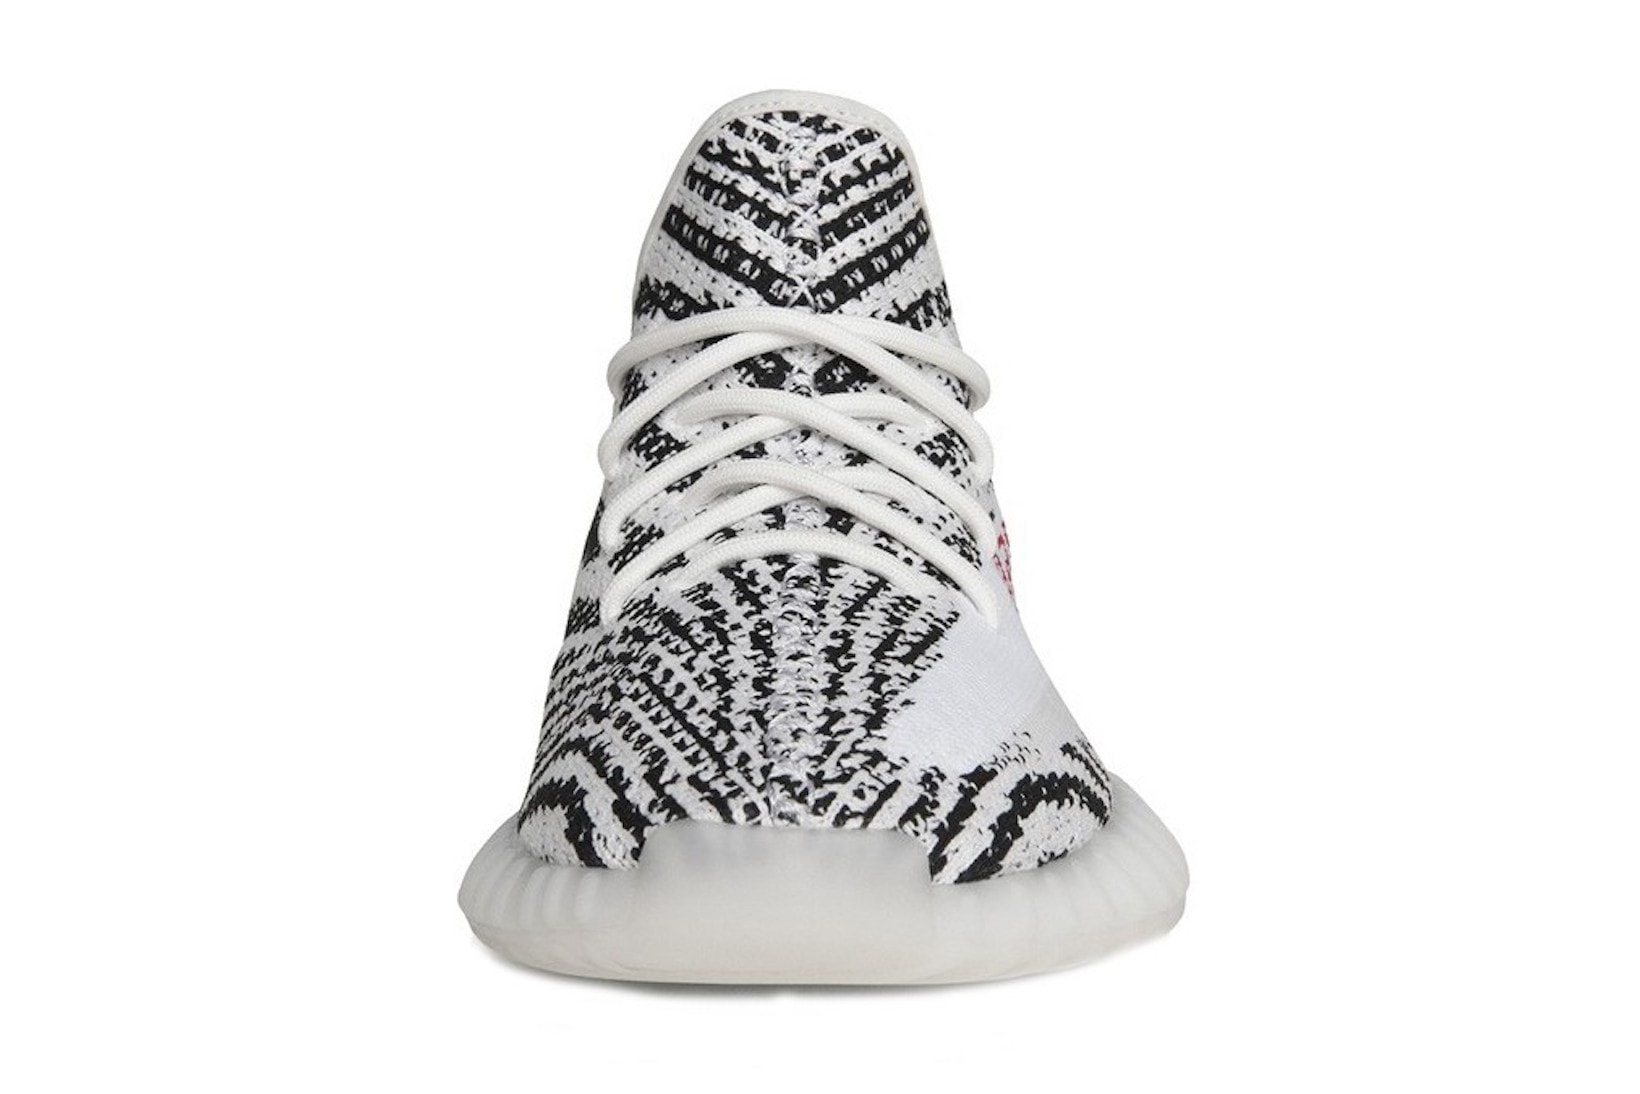 adidas YEEZY BOOST 350 V2 Zebra White Black Sneakers Footwear Kicks Shoes